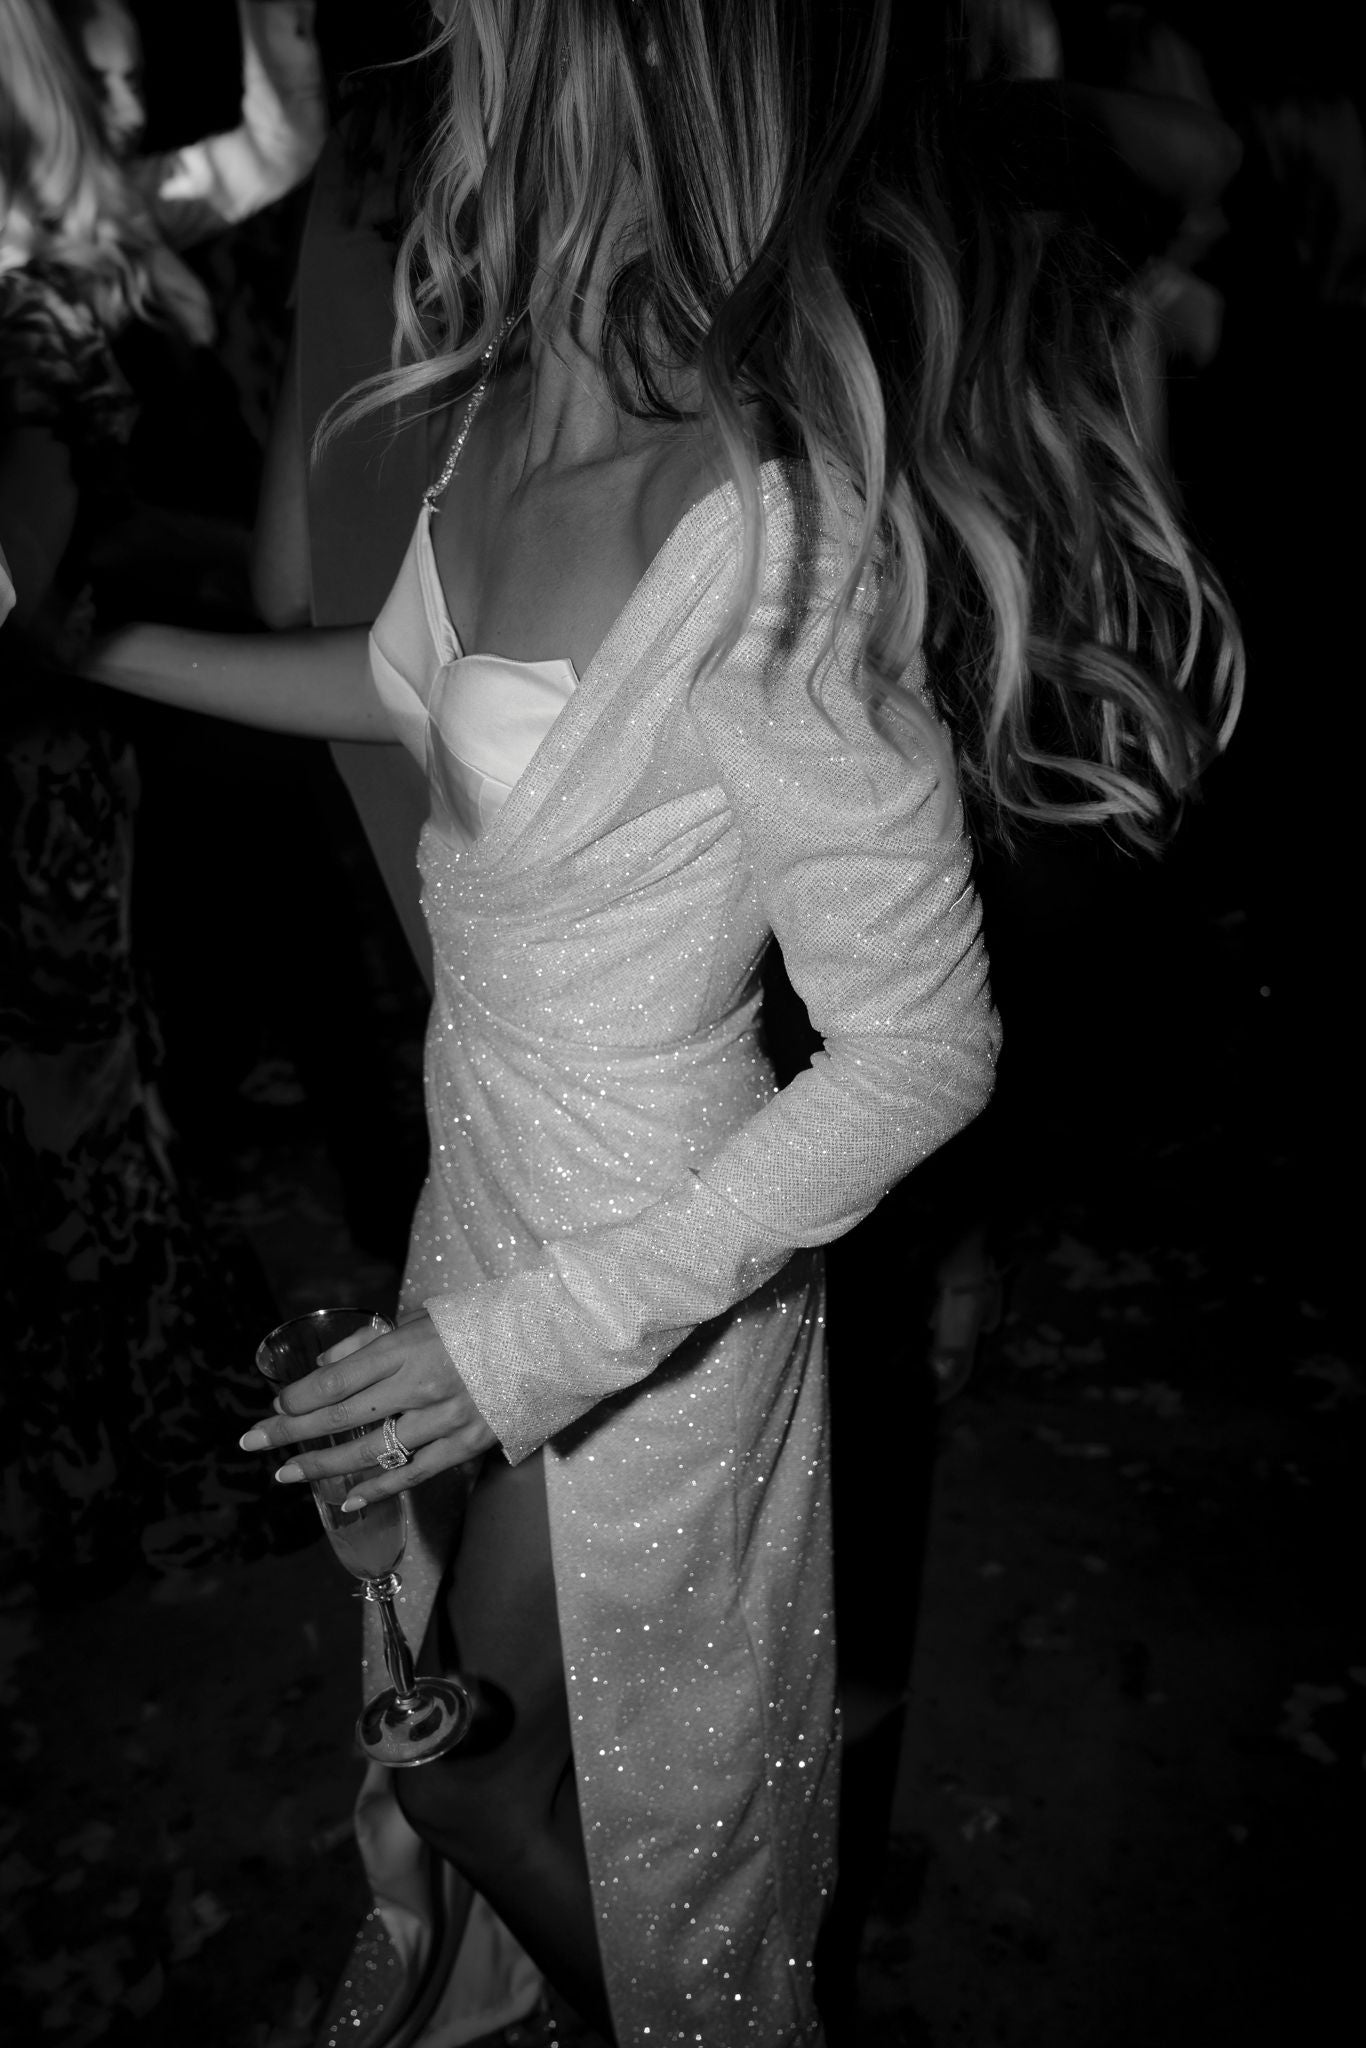 Amelia Murs' partying wearing evening wedding dress